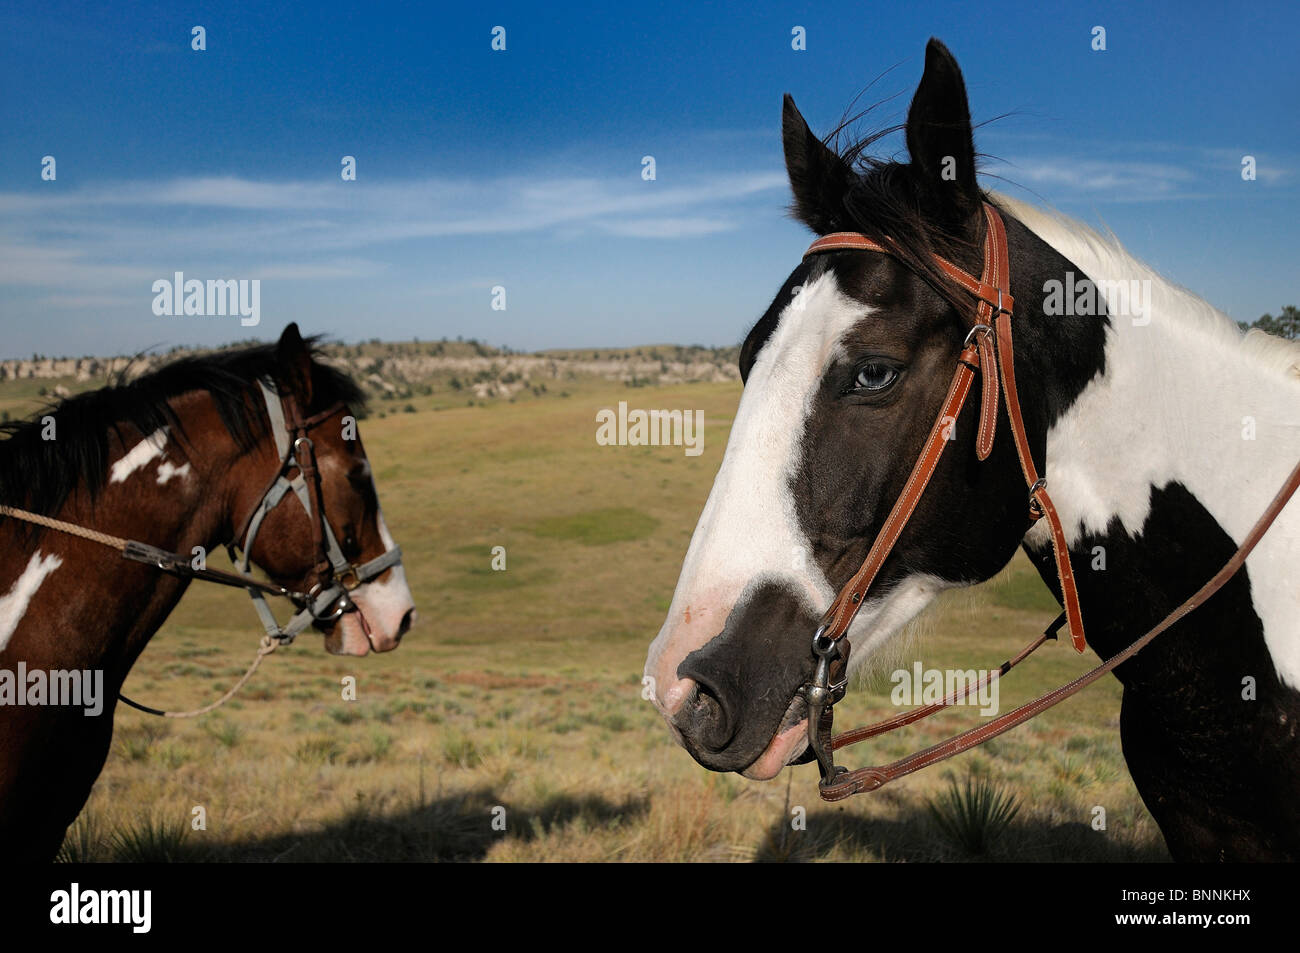 Pferde-Porträts Pine Ridge Pine Ridge Indian Reservation South Dakota USA Amerika Vereinigte Staaten von Amerika Prärie Stockfoto